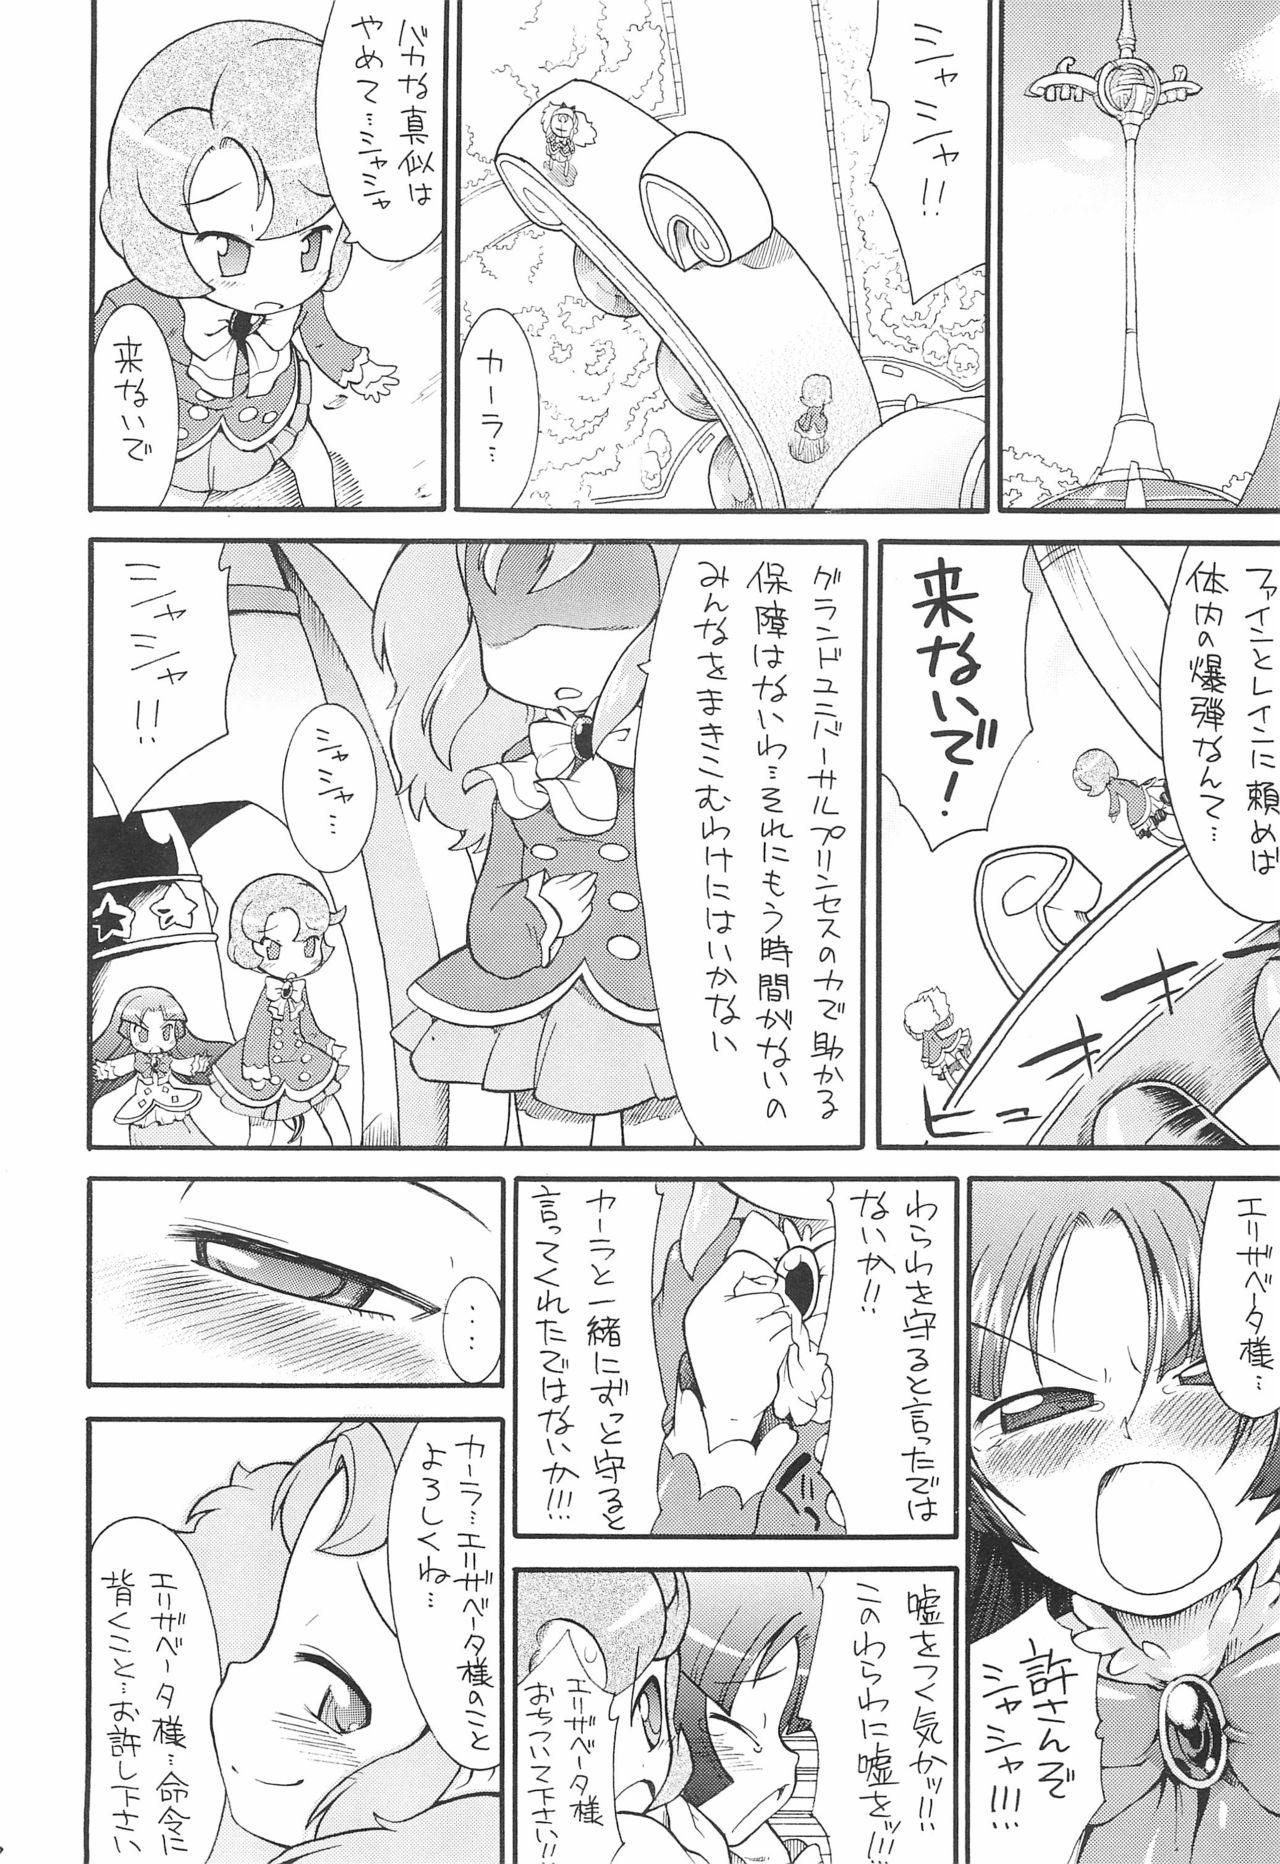 Big Dick Kodomo ja Neenda Princess nanda! 6 - Fushigiboshi no futagohime | twin princesses of the wonder planet Oldvsyoung - Page 6